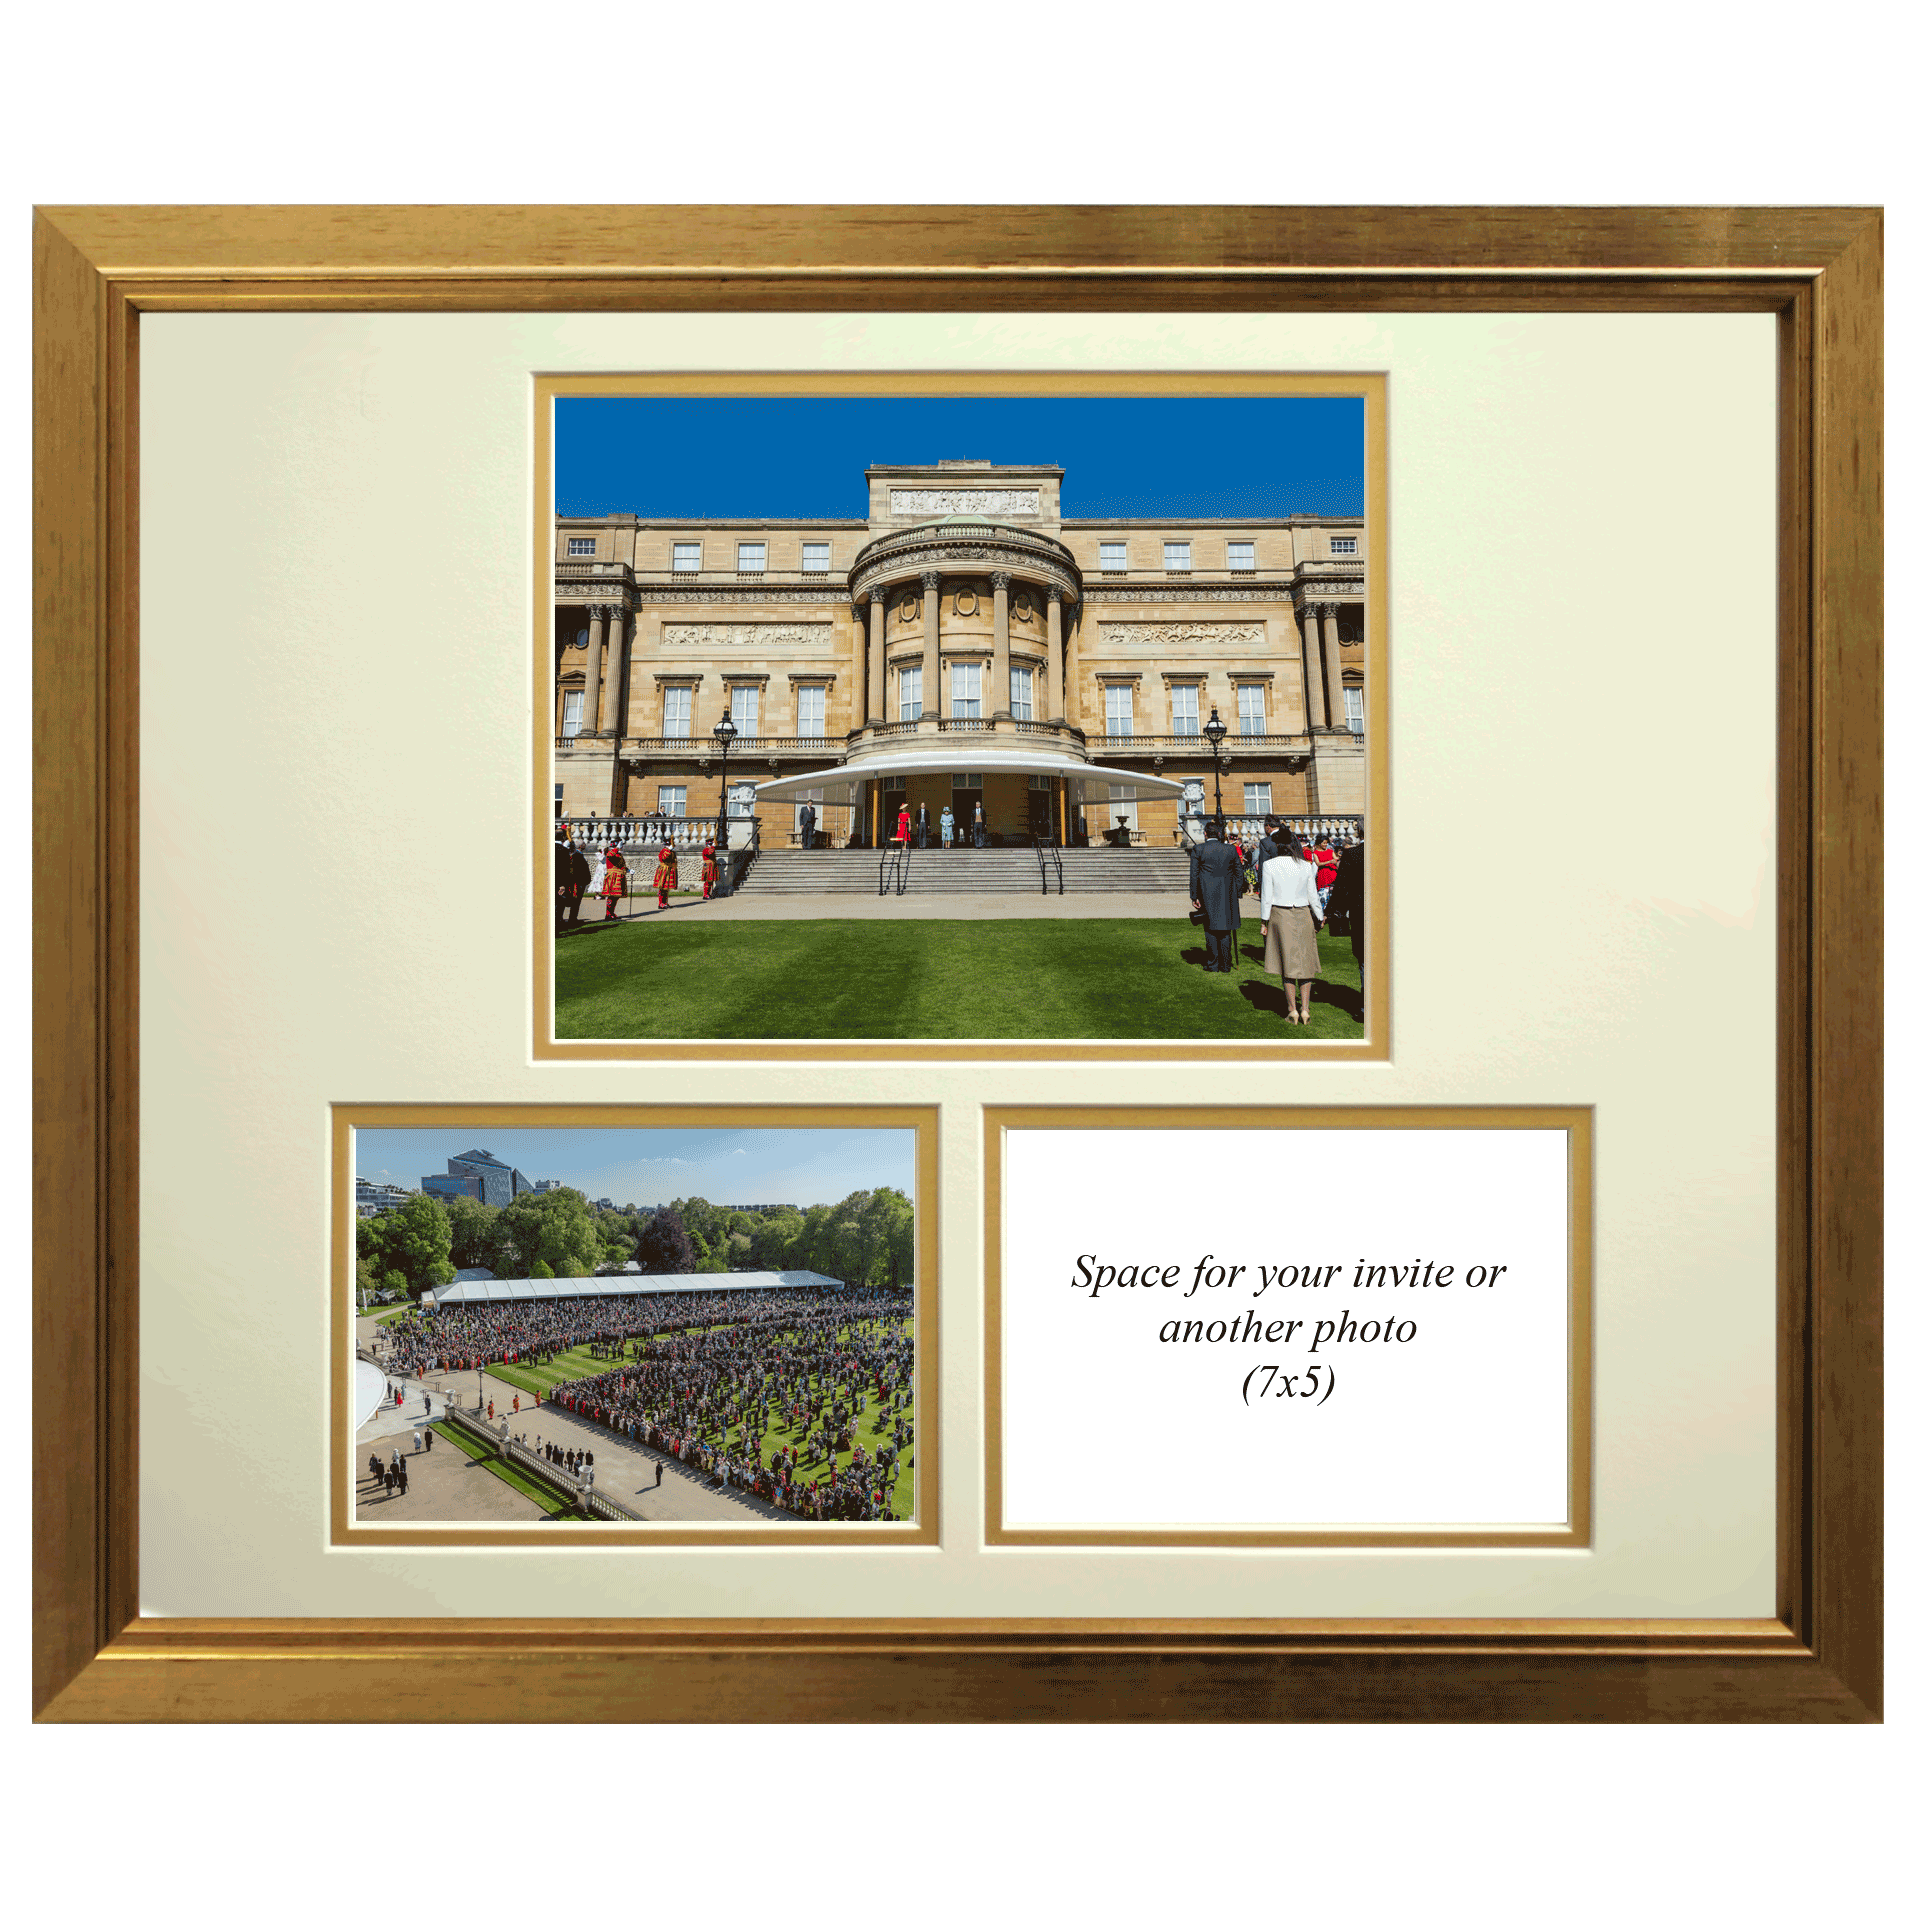 Commemorative 2018 Royal Garden Party Framed Photograph